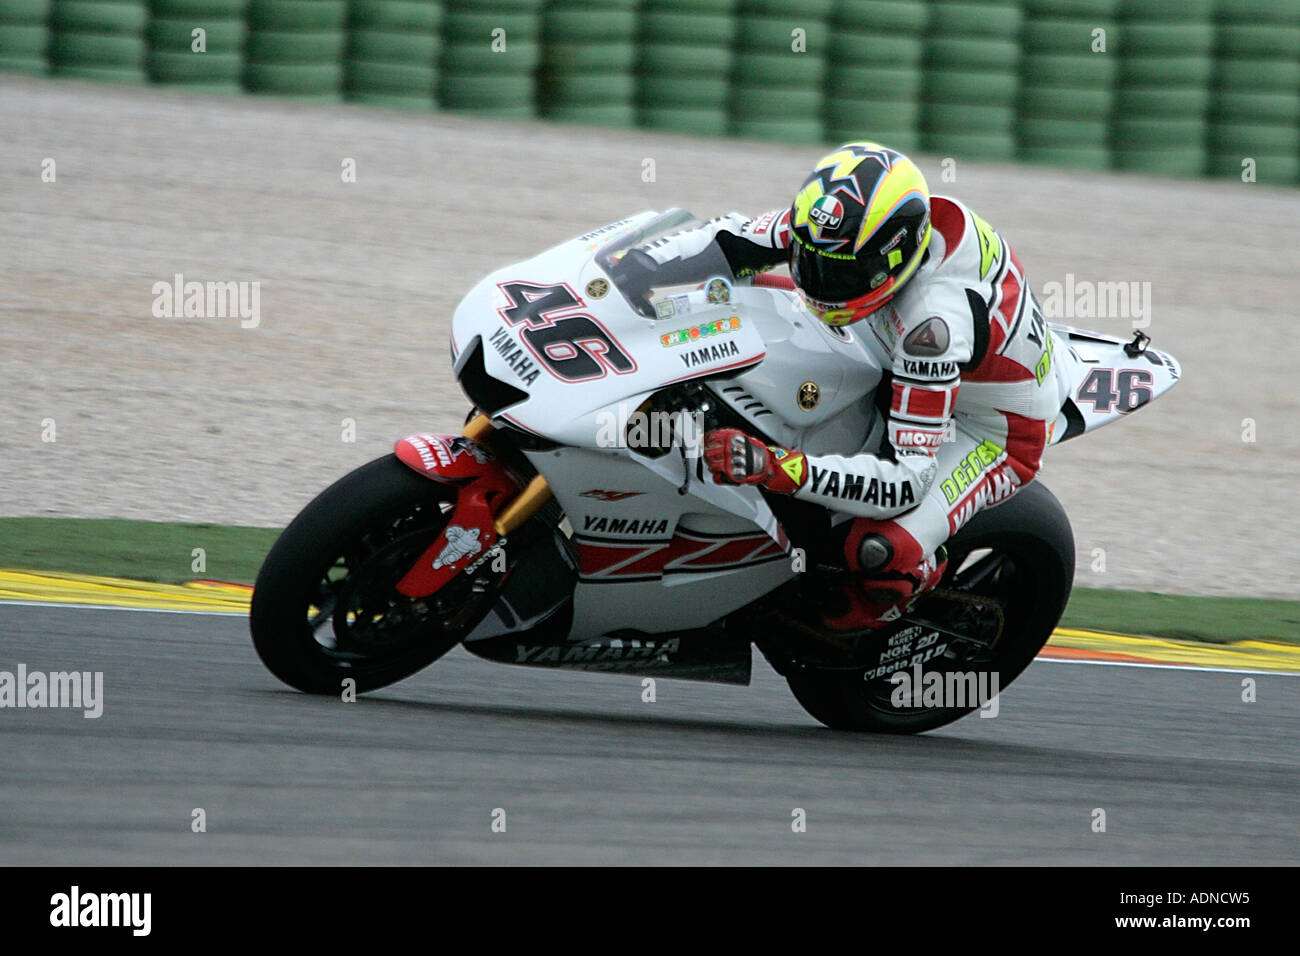 Valentino Rossi, World Moto GP champion riding for Yamaha in 2006 championship at Valencia circuit Stock Photo